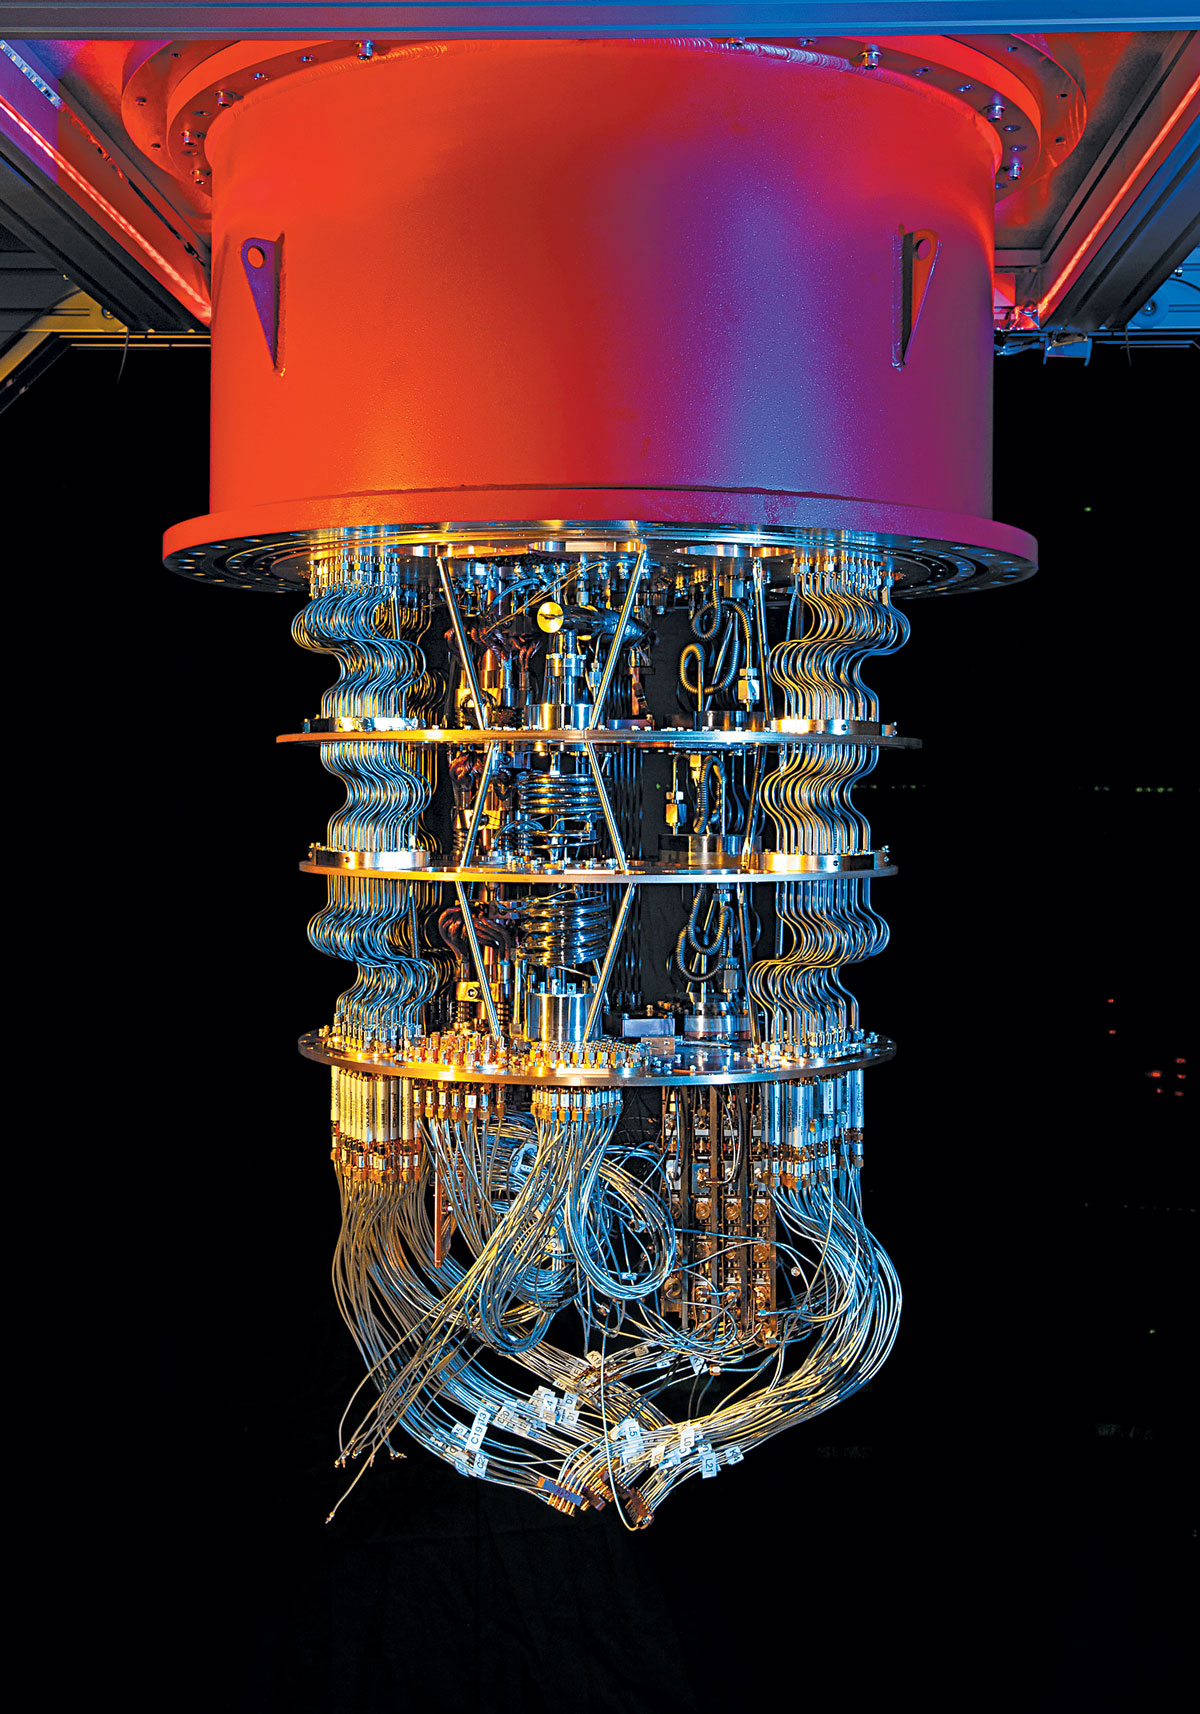 Photograph of Google's quantum computer.